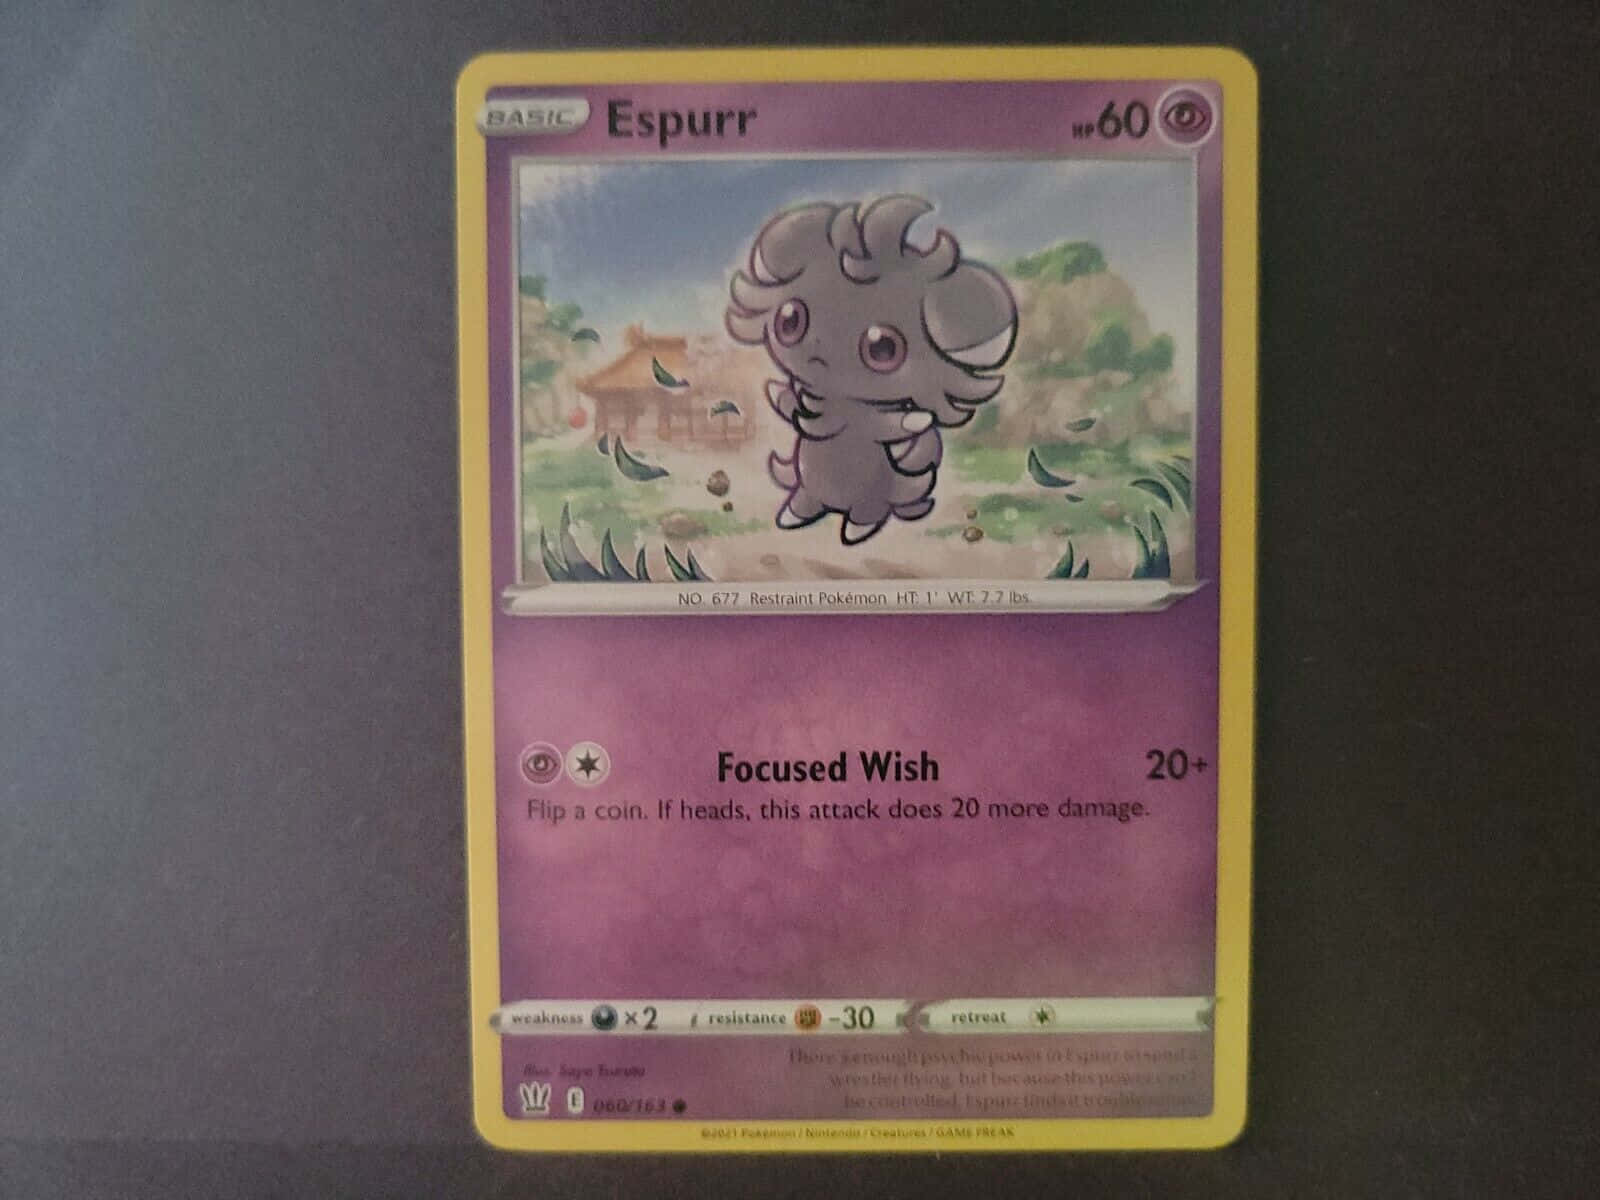 Focused Wish Pokémon Card Of Espurr Wallpaper